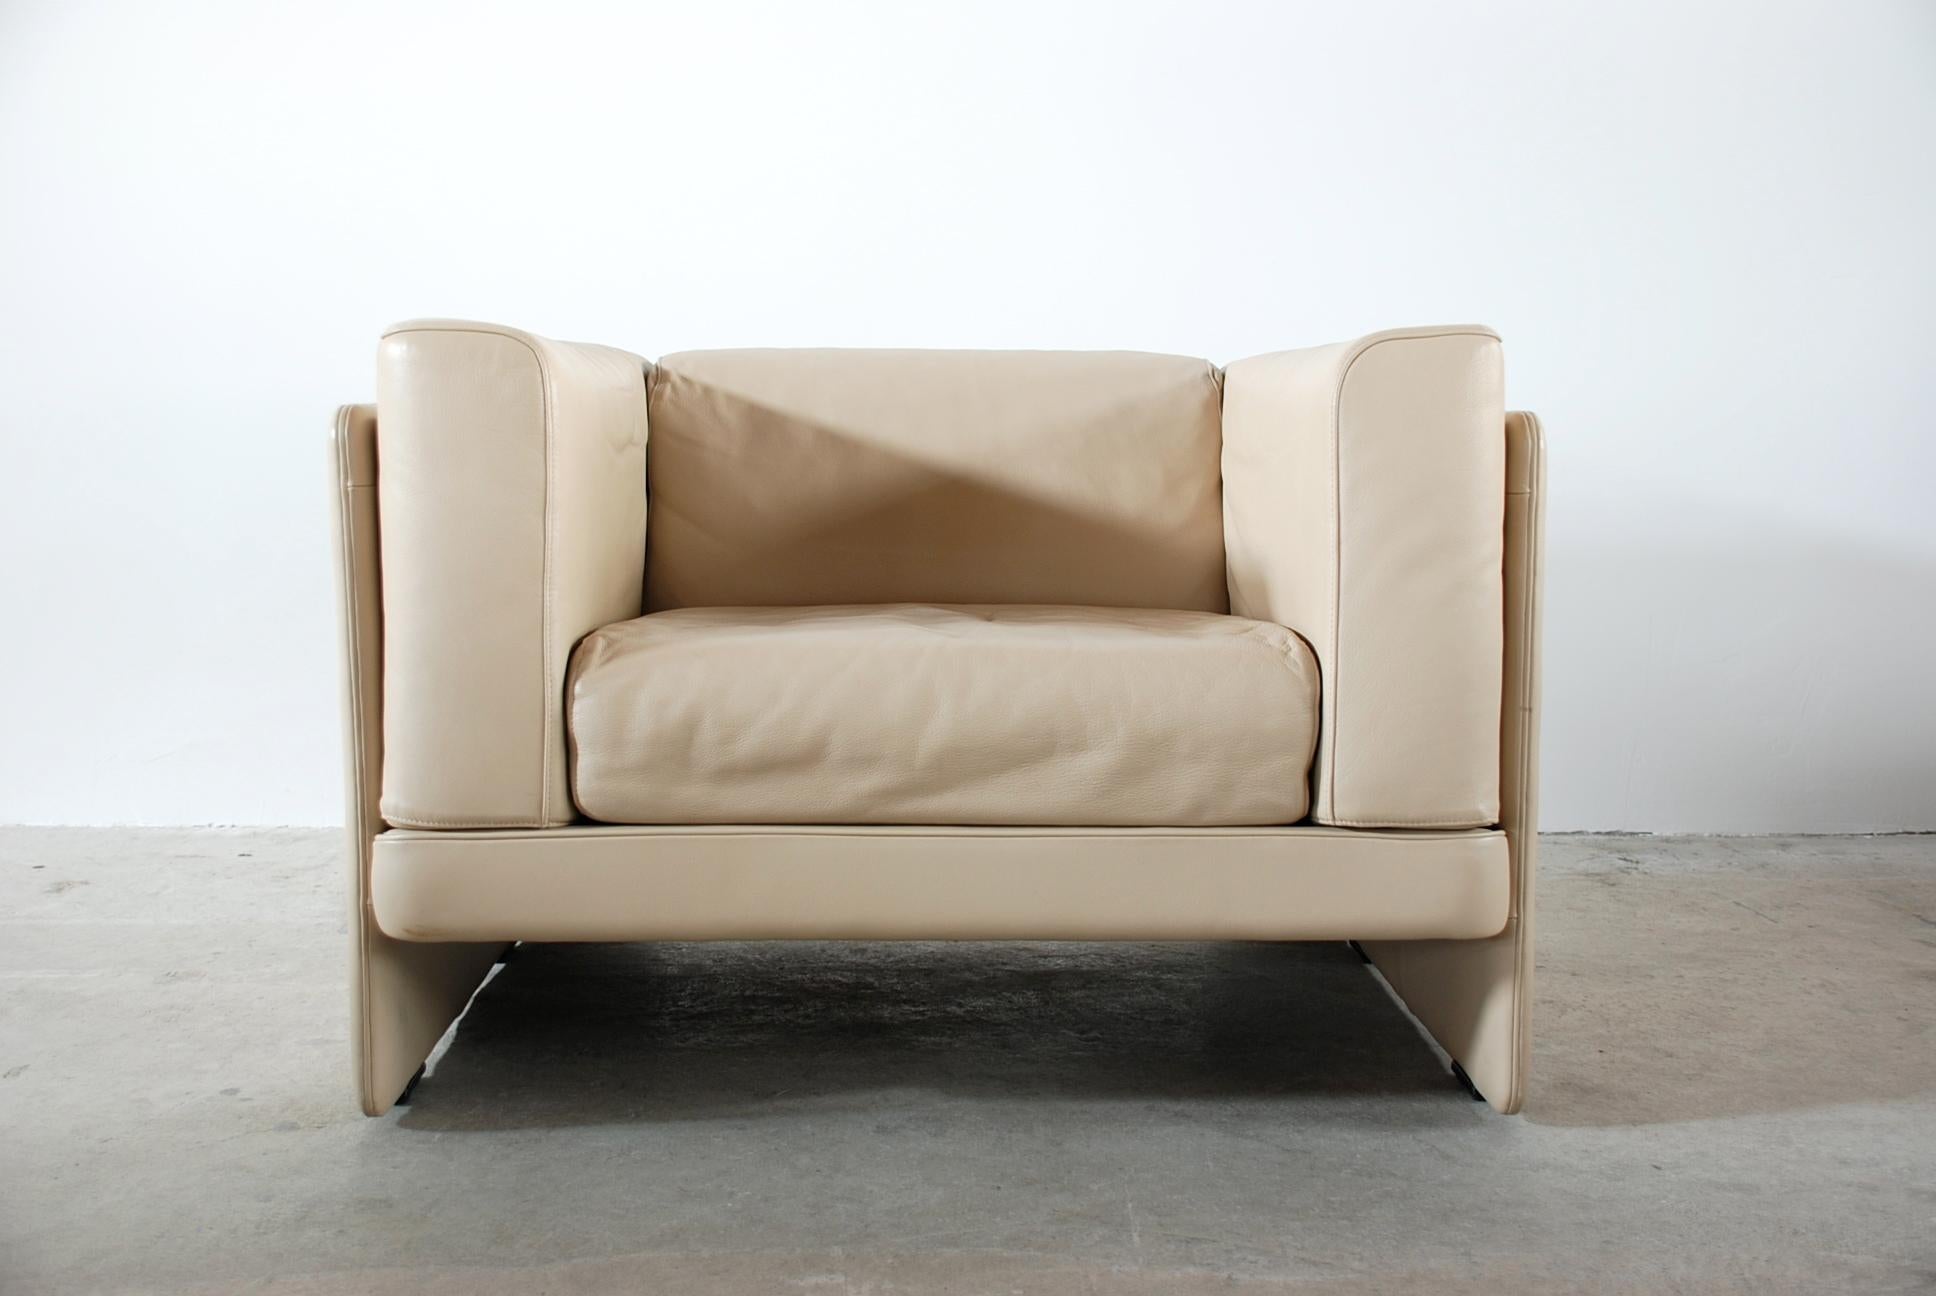 Modern Poltrona Frau Armchair Chair Model La Capanelle by Tito Angoli